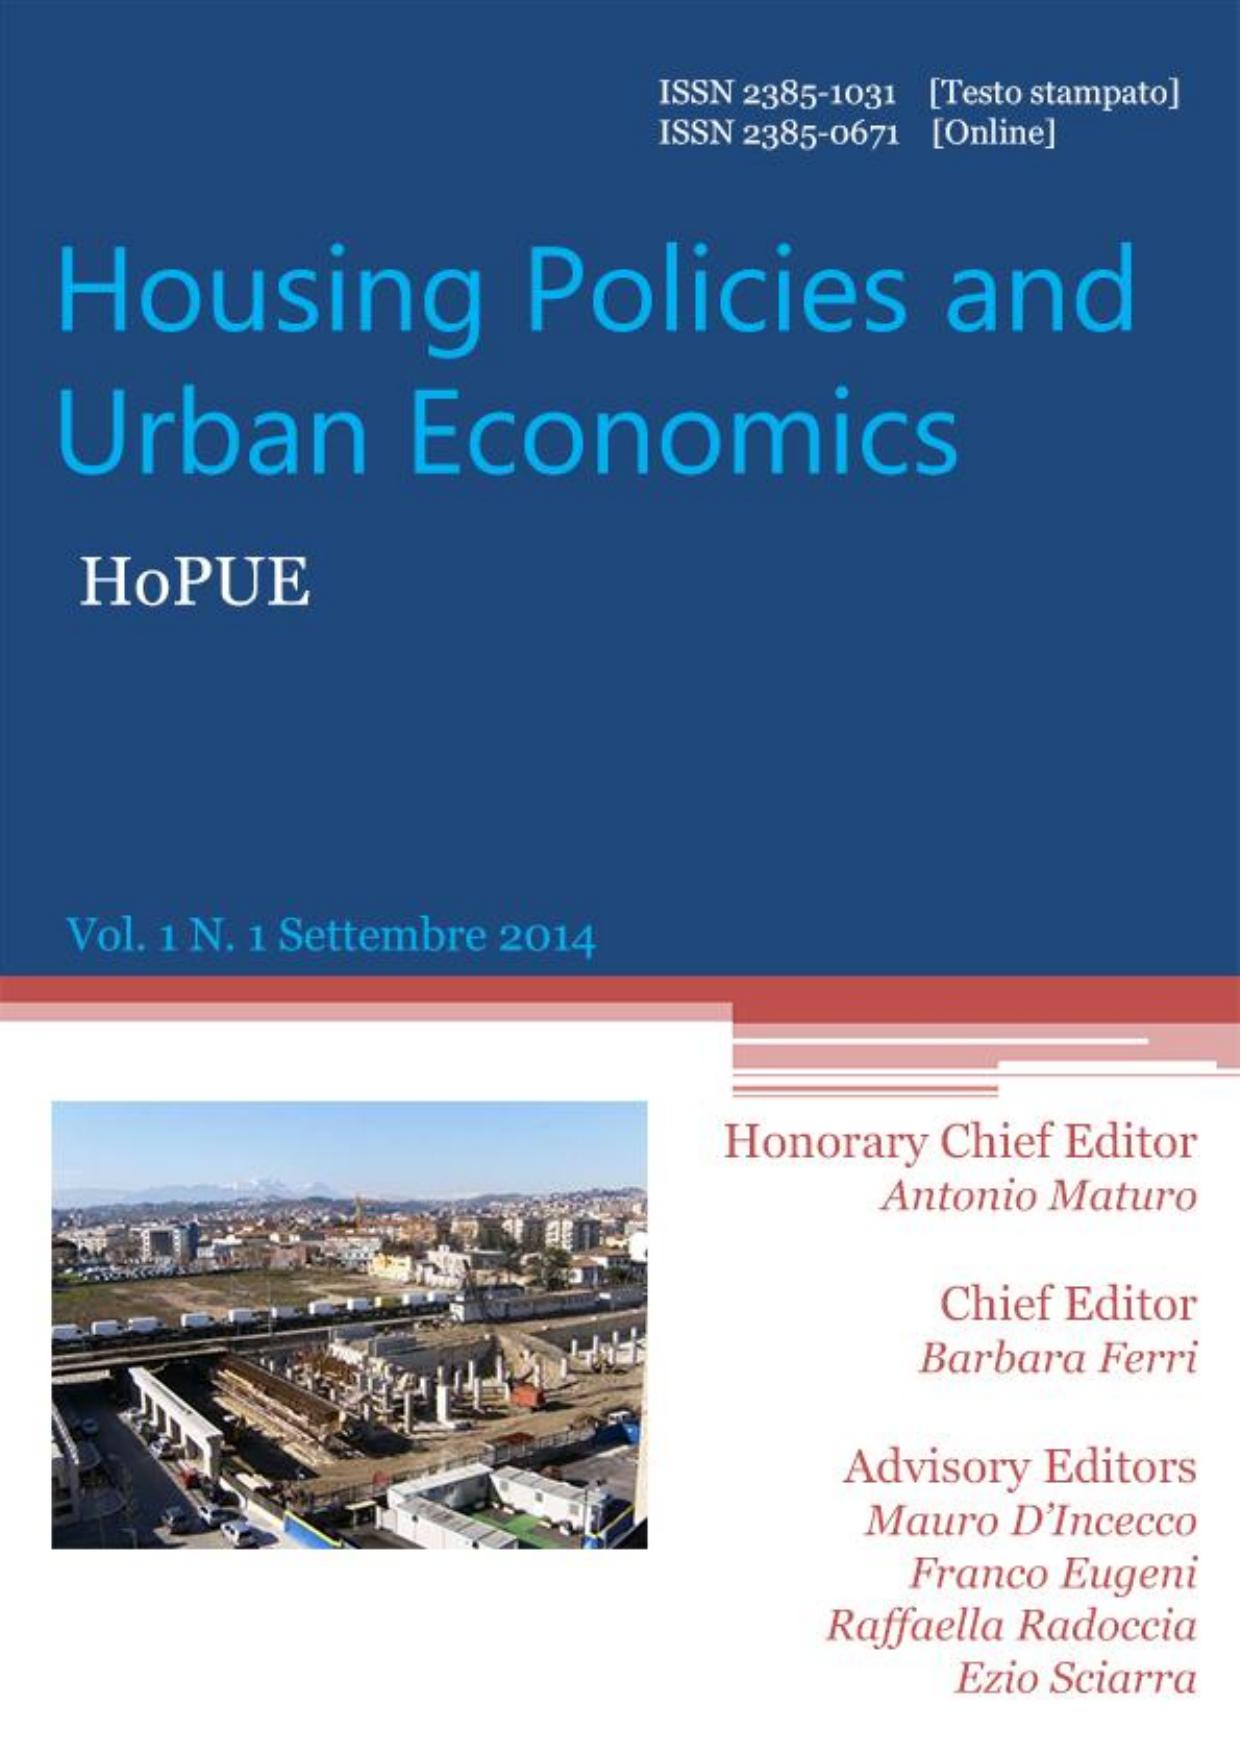 Housing Policies and Urban Economics 2014